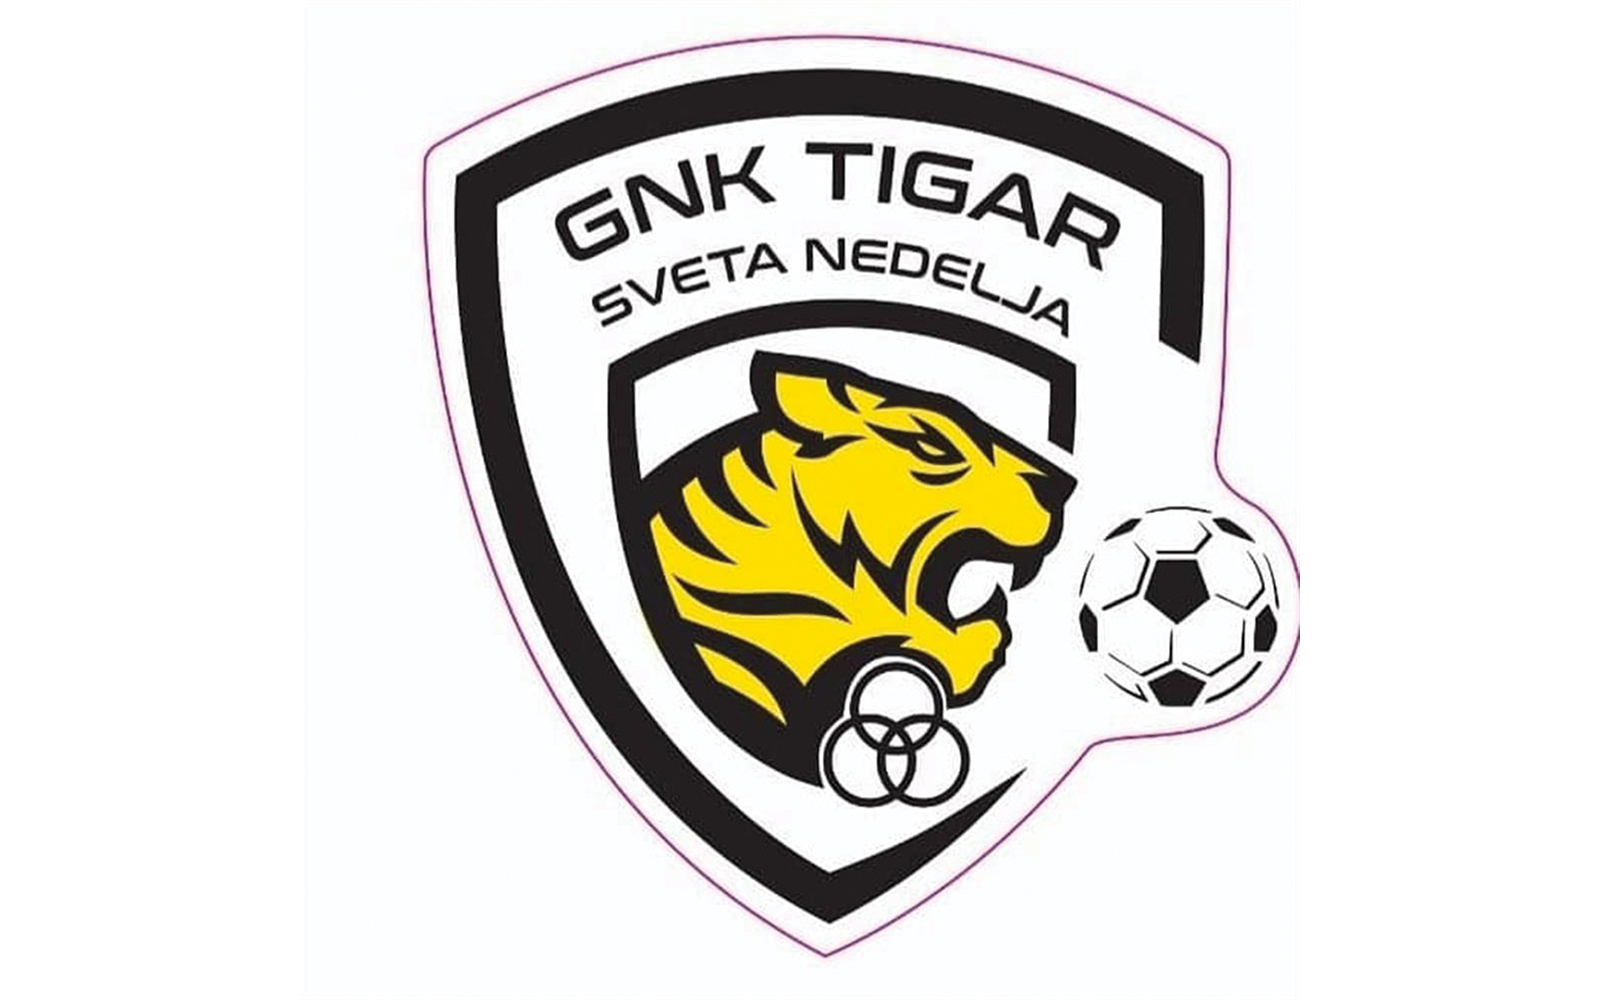 4. nogometna liga središte Zagreb – B - 1. kolo
Libertas – GNK Tigar Sveta Nedjelja 0:3 (0:1)